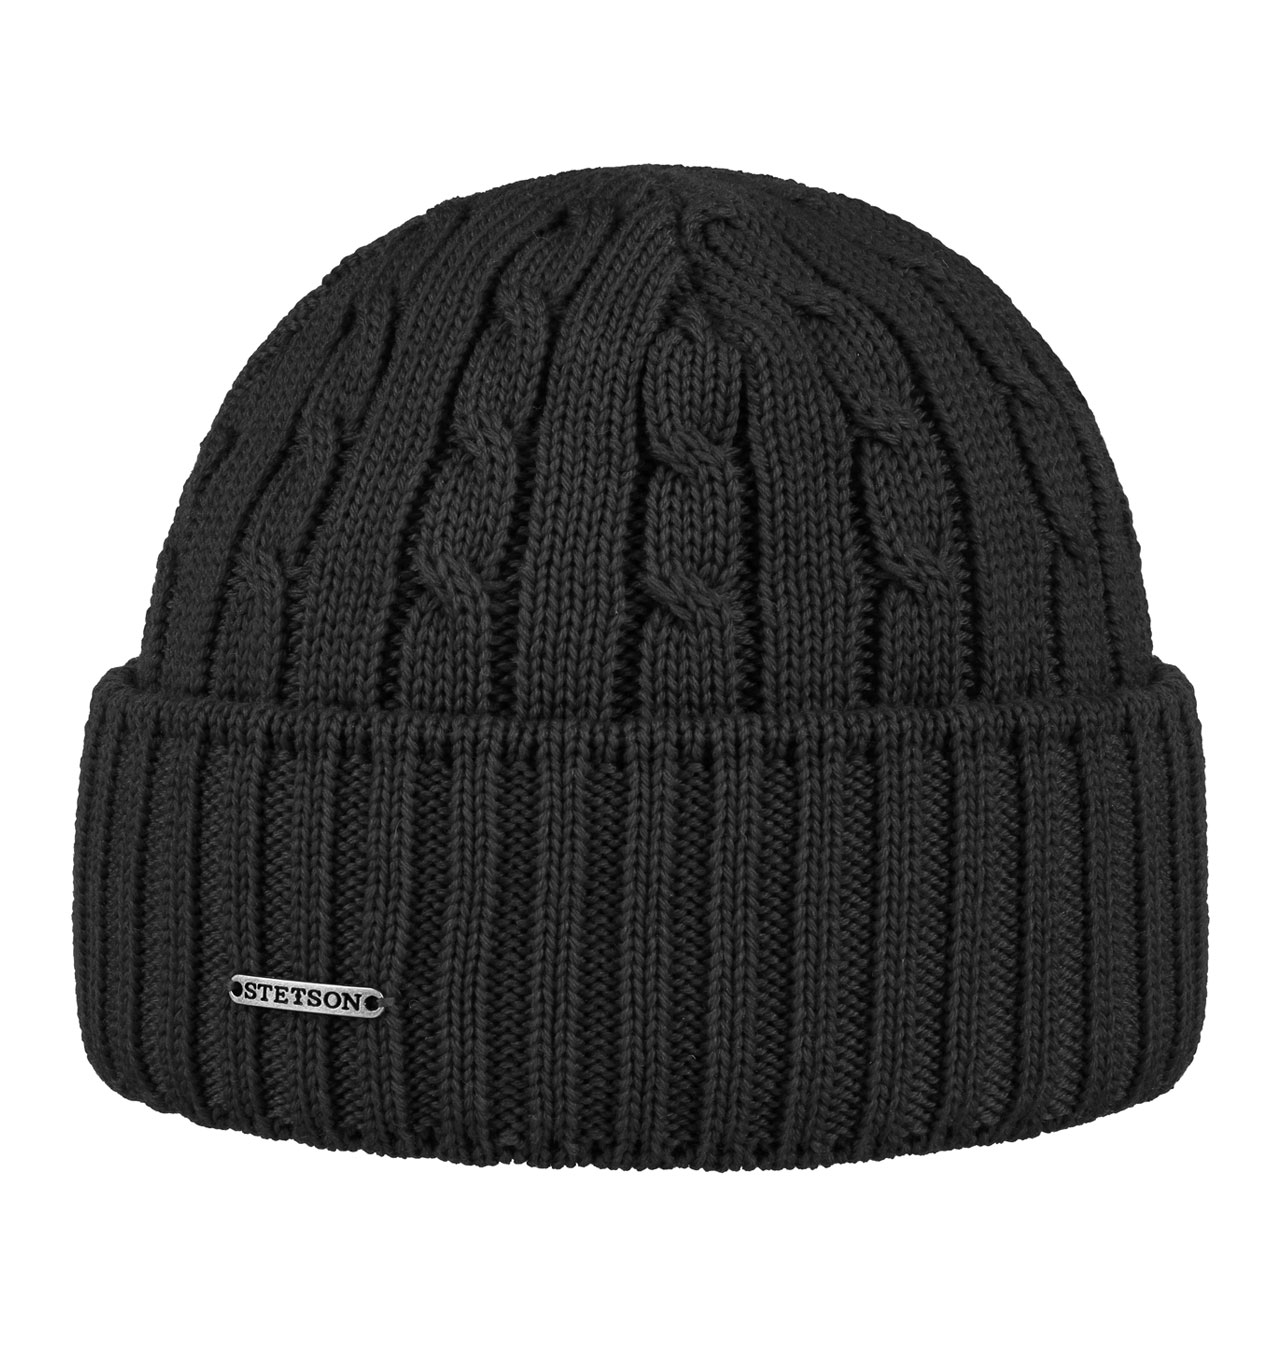 Stetson - Georgia Wool Knit Hat - Black